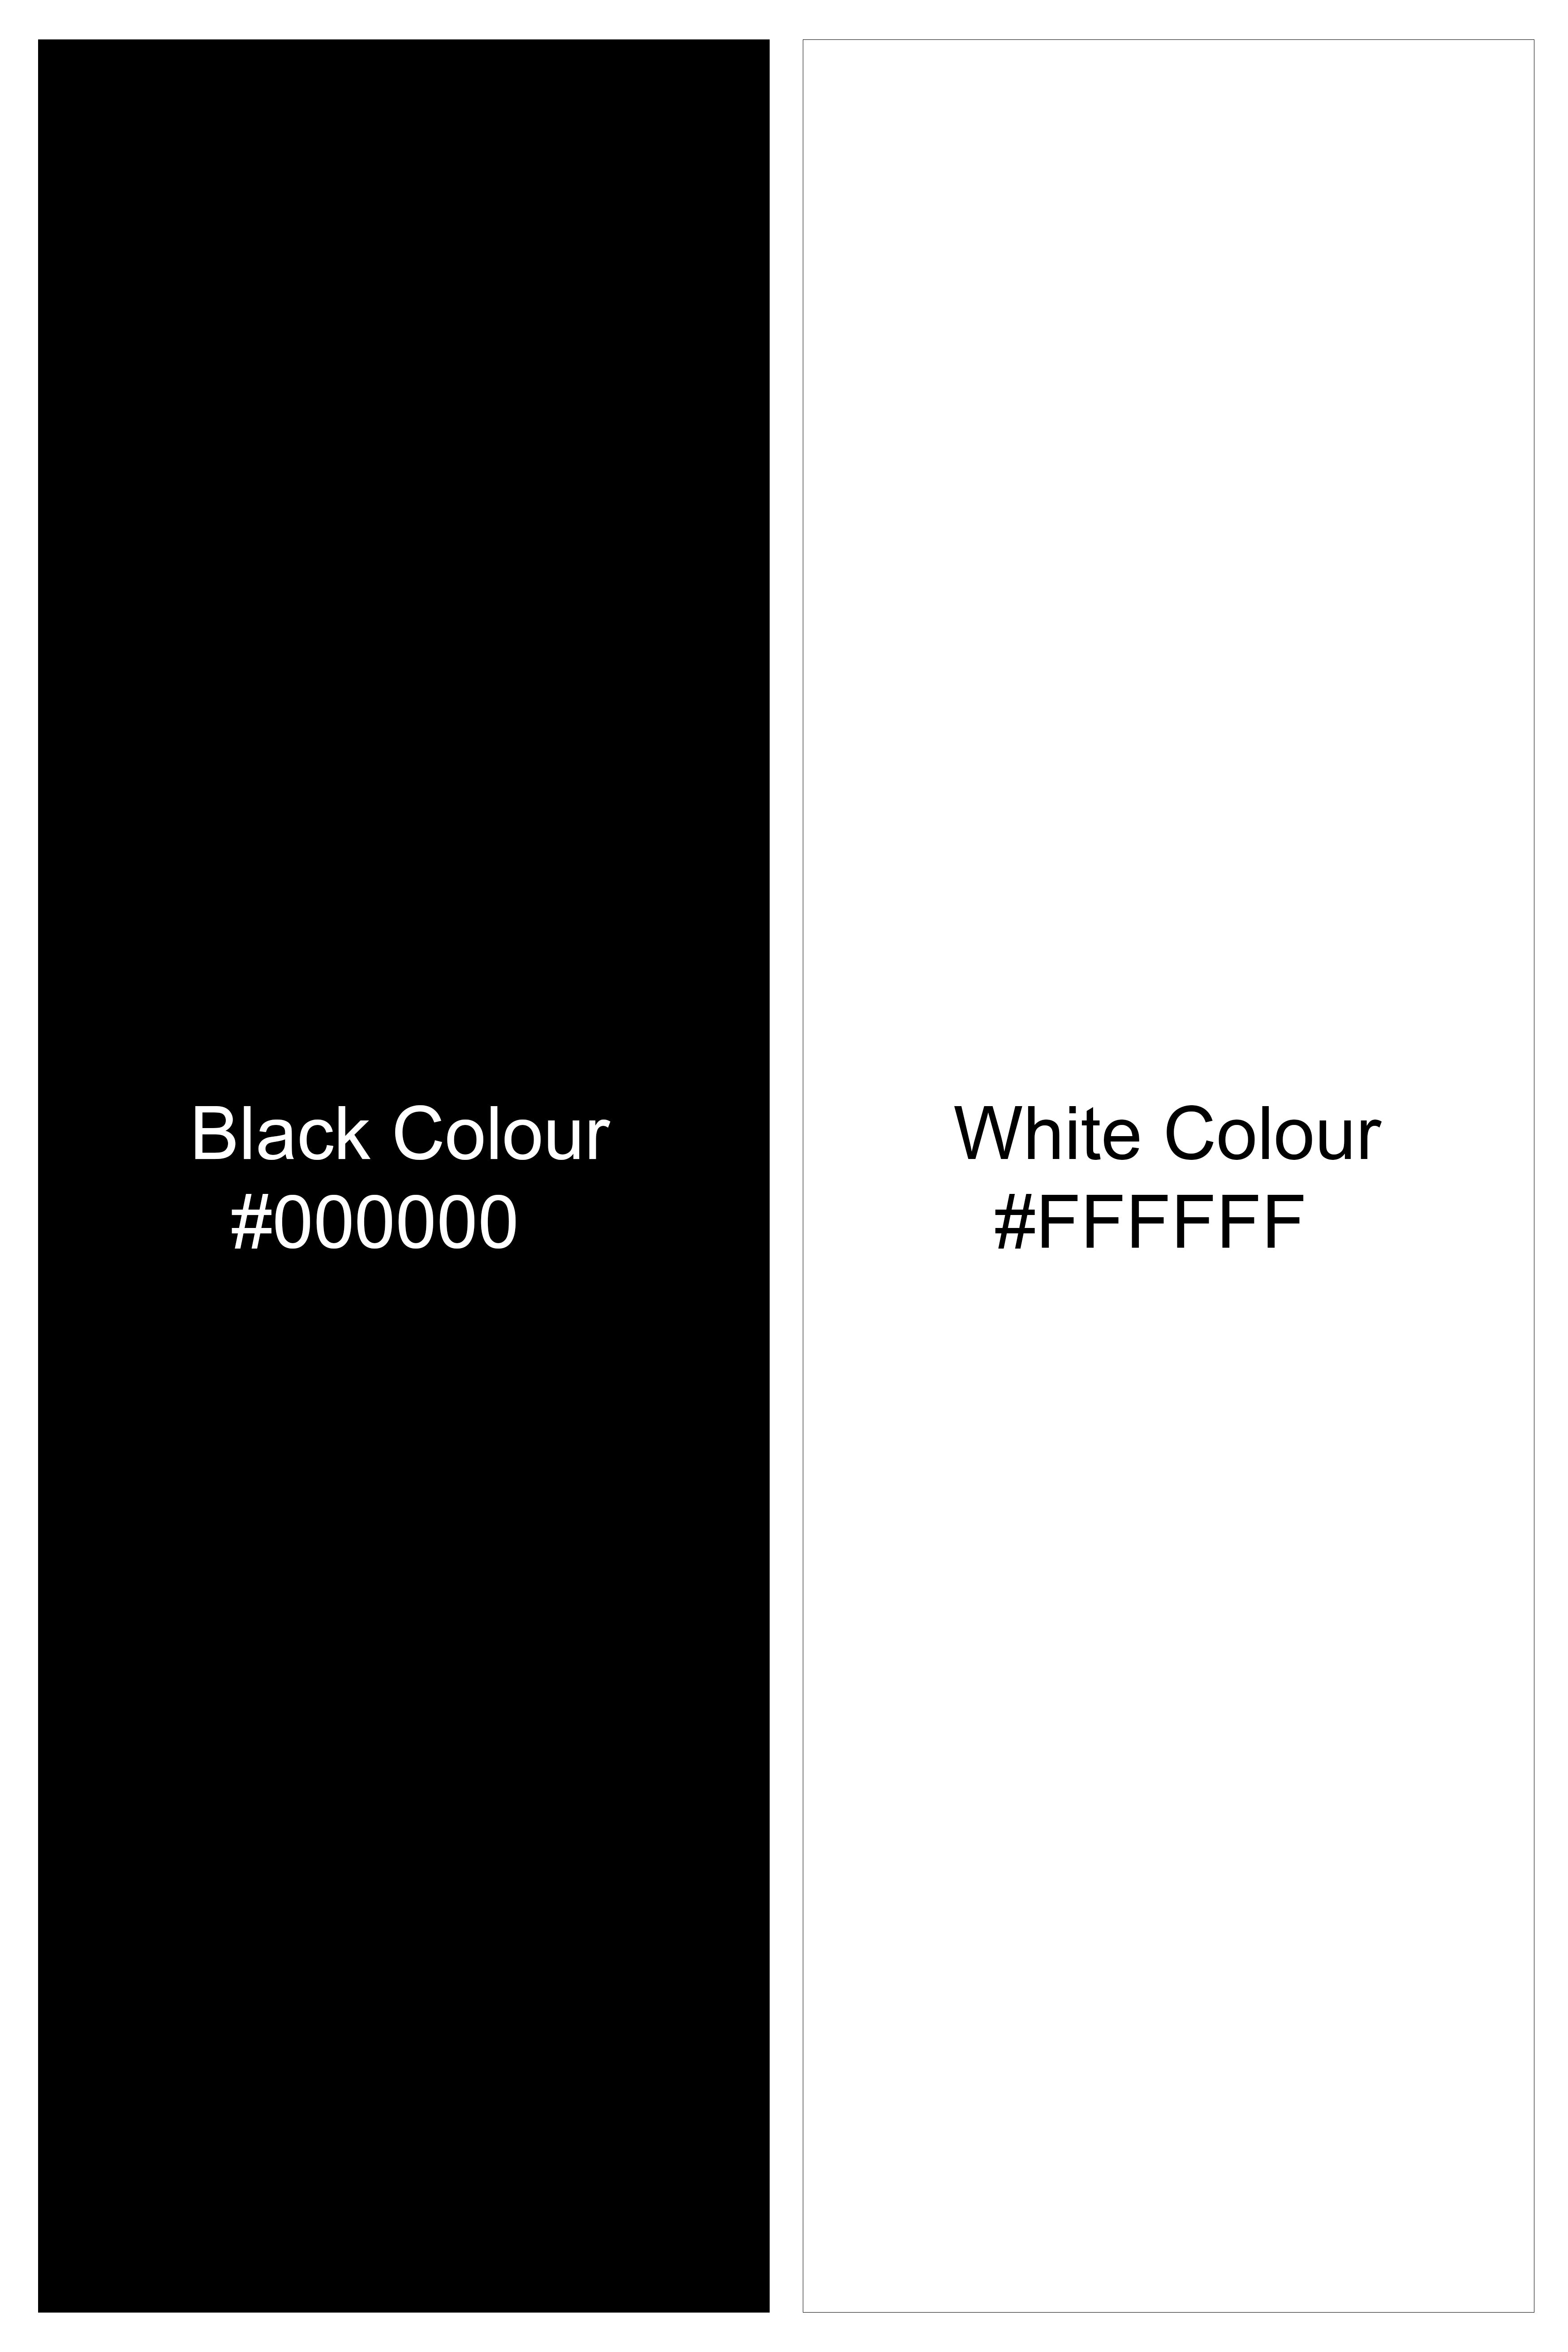 Jade Black and White Premium Cotton Jersey T-Shirt TS912-S, TS912-M, TS912-L, TS912-XL, TS912-XXL